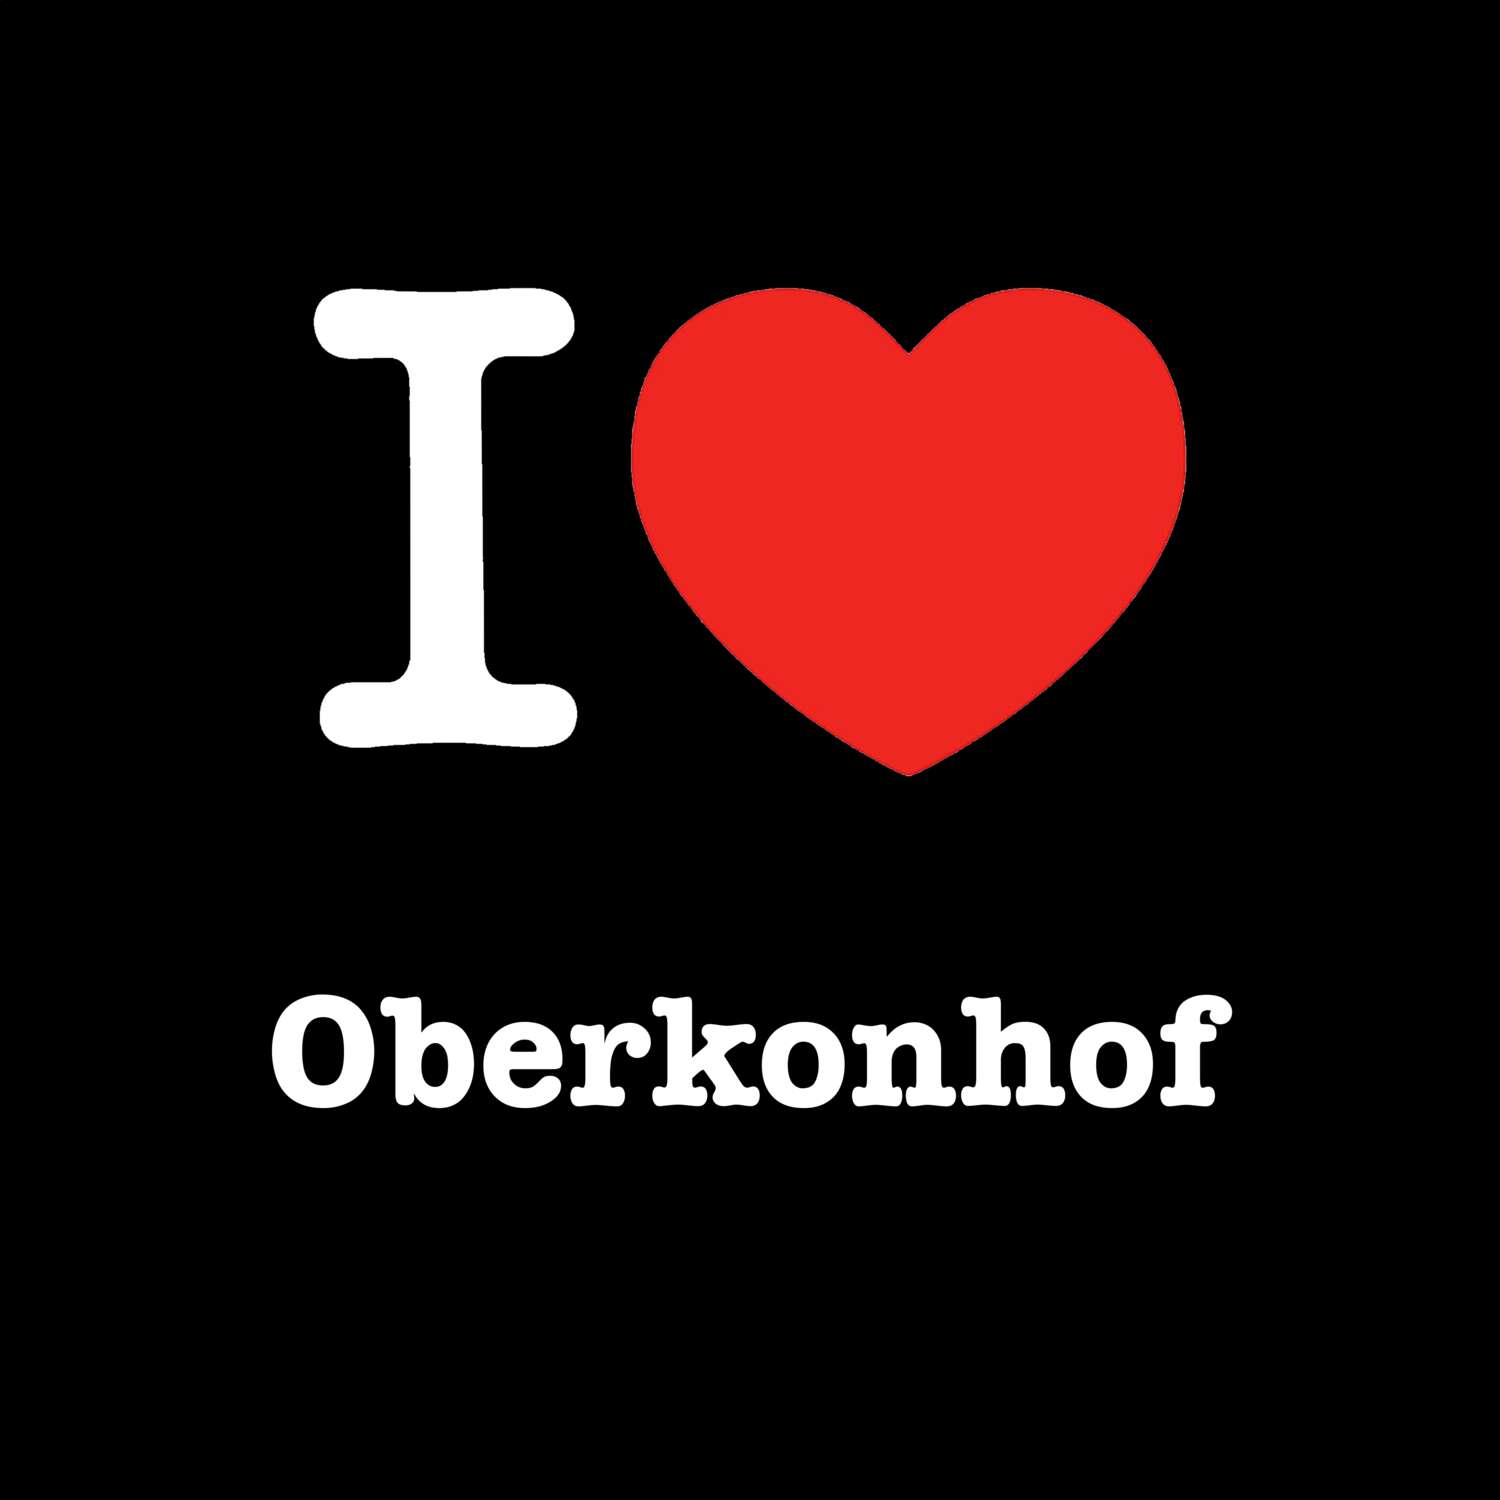 Oberkonhof T-Shirt »I love«